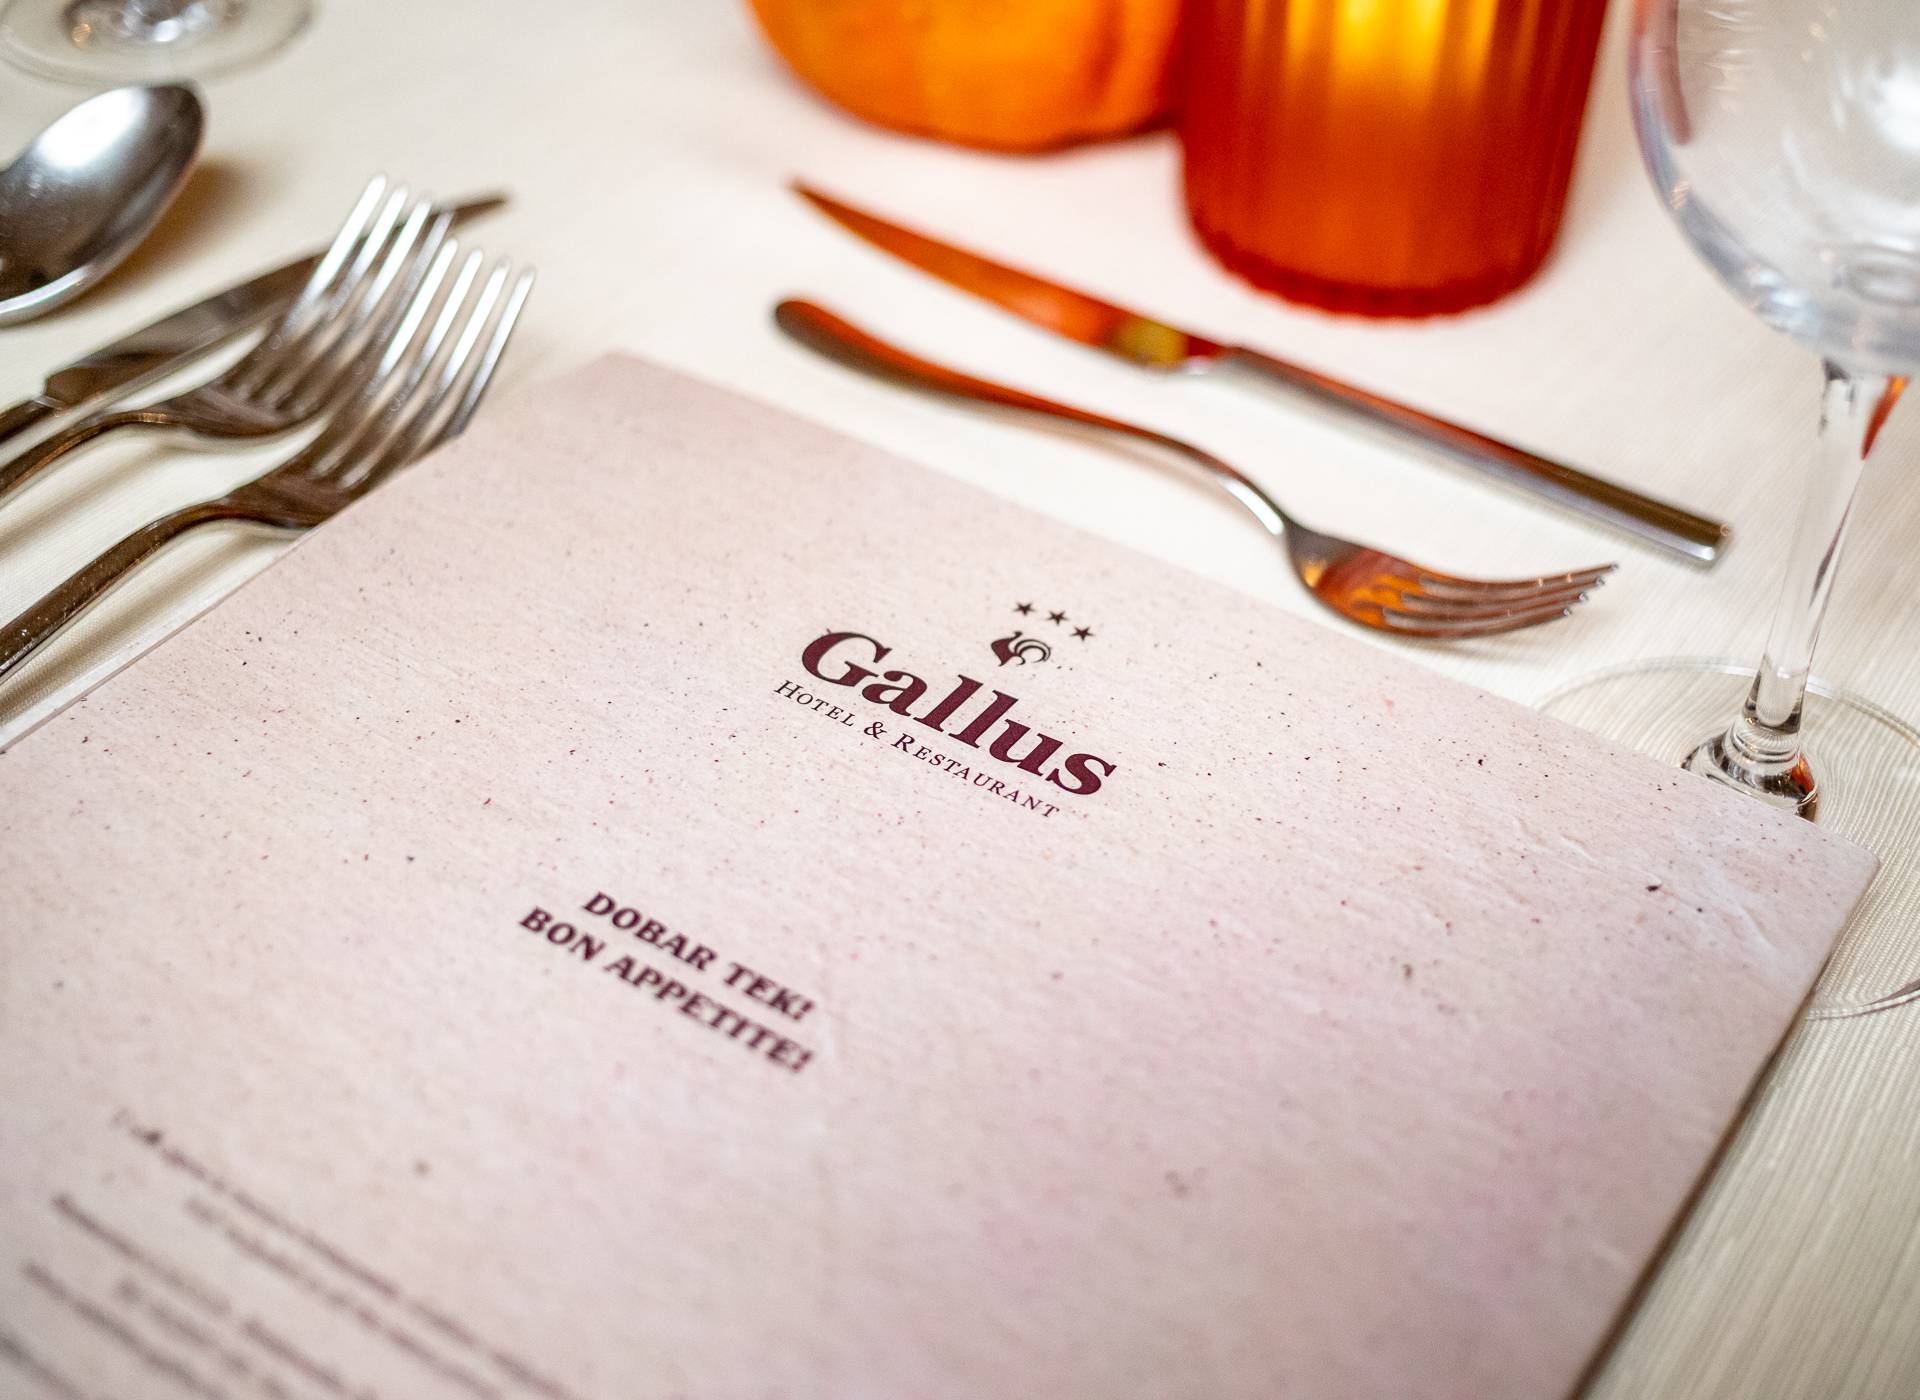 Proslavite ljubav uz romantičnu večeru u restoranu Gallus